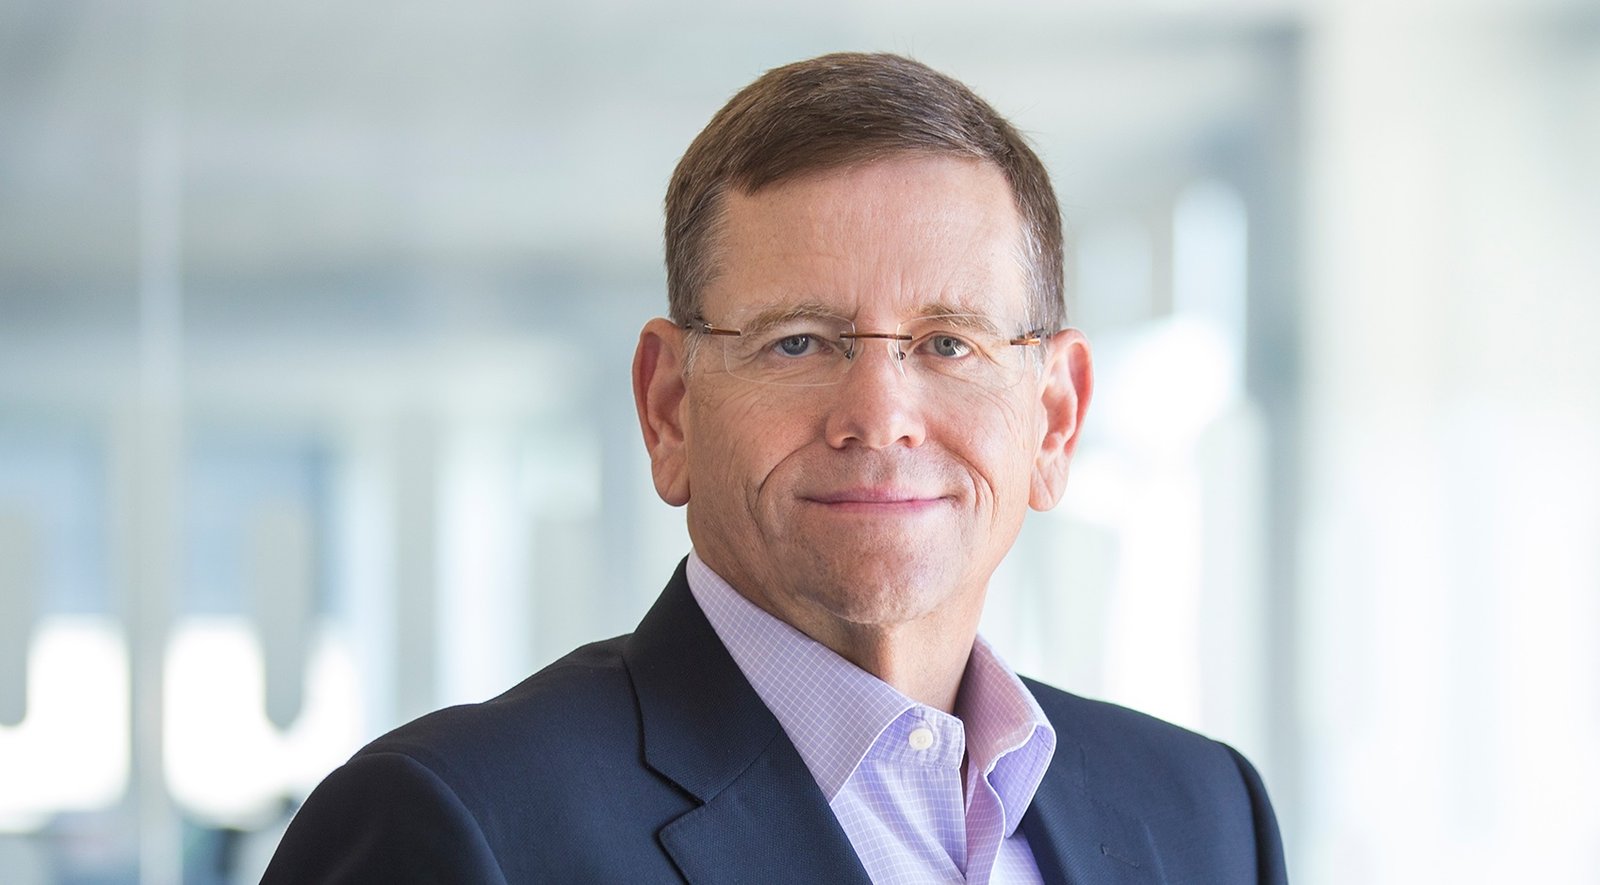 David Goeckeler, the new CEO for Western Digital